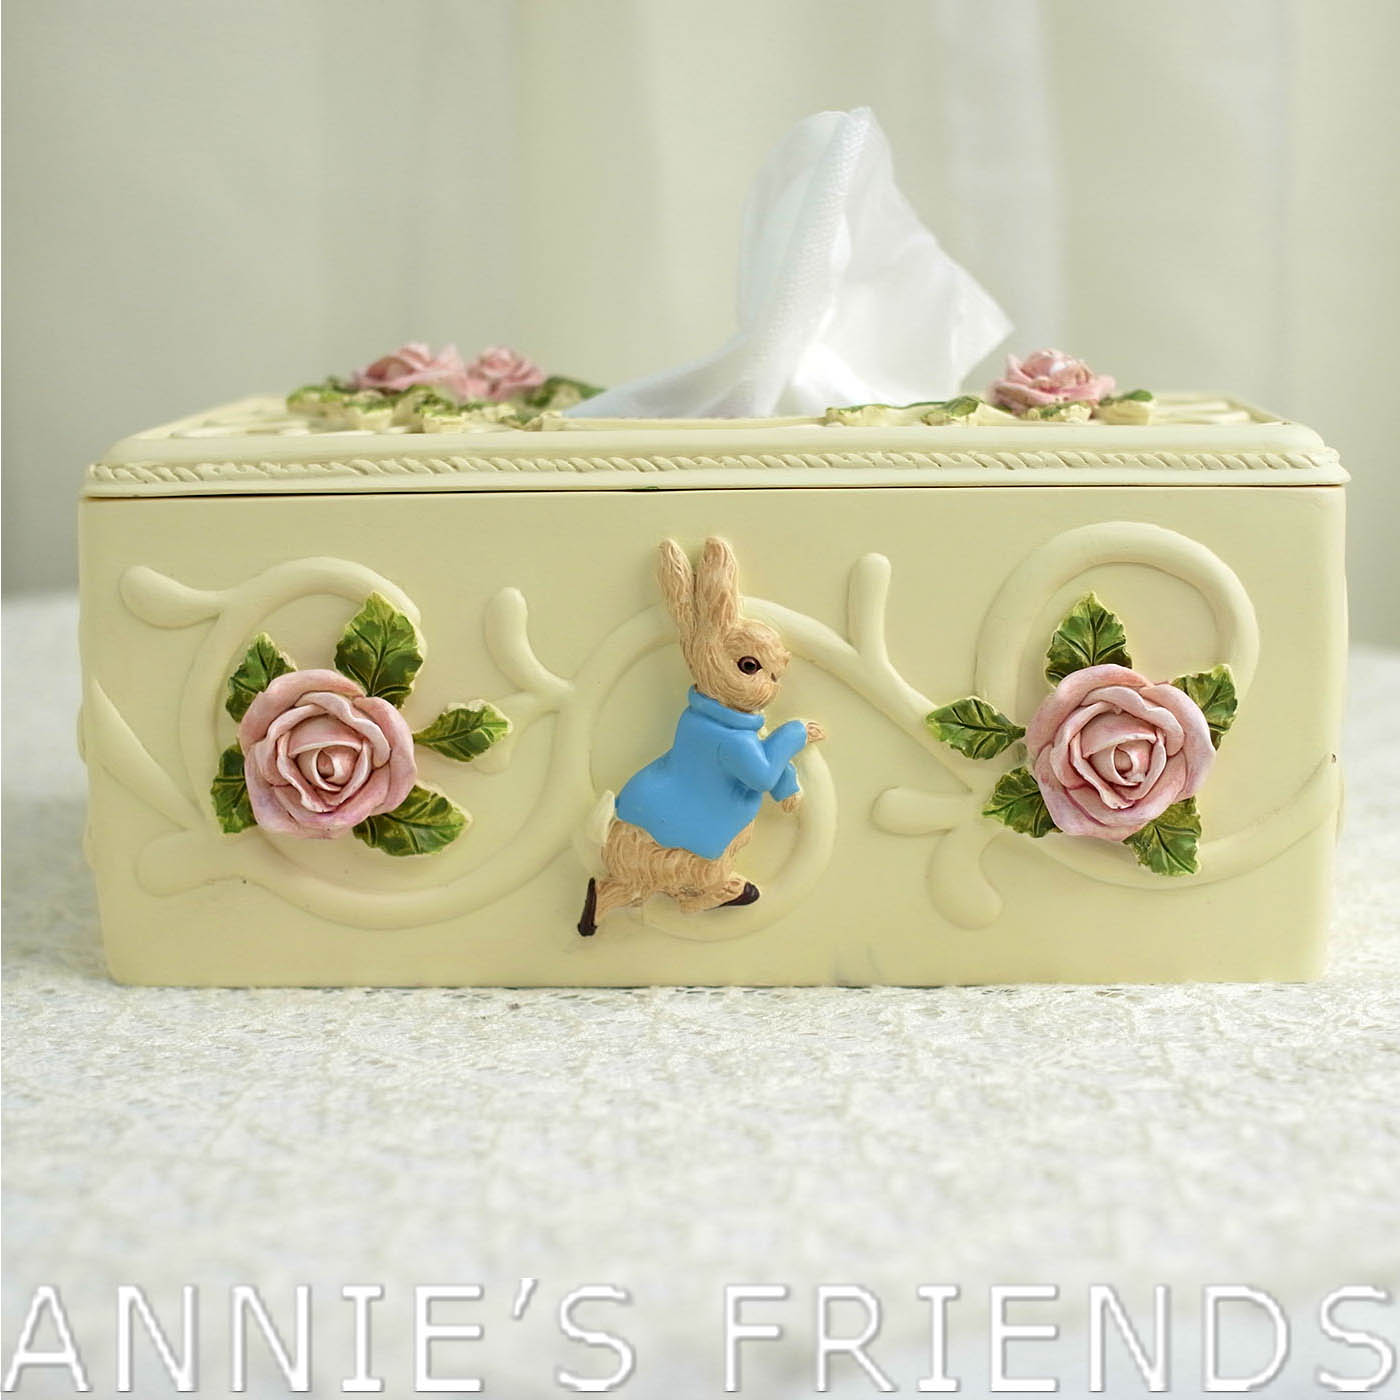 AnniesFriends 彼得兔 Peter Rabbit 玫瑰面紙盒 典雅 浪漫 家飾 收納 禮品